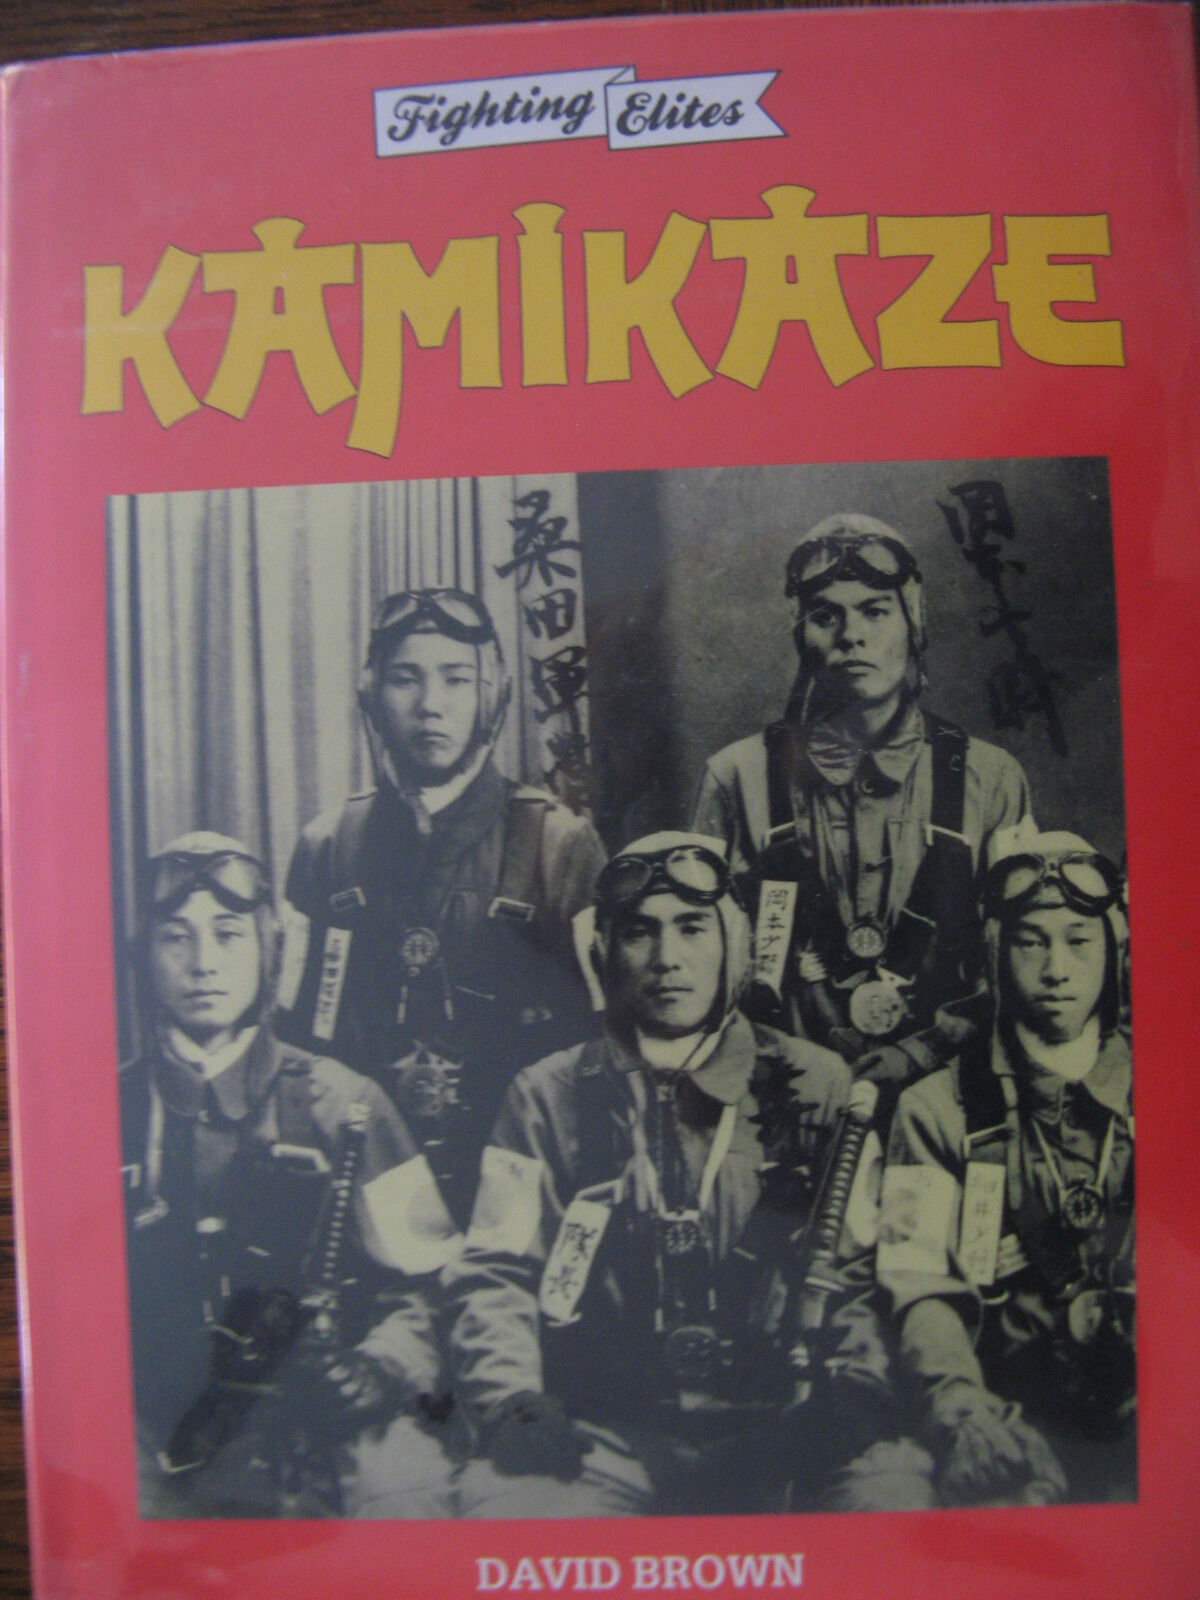 KAMIKAZE -FIGHTING ELITES- BY BAVID BROWN HC DJ BOOK 